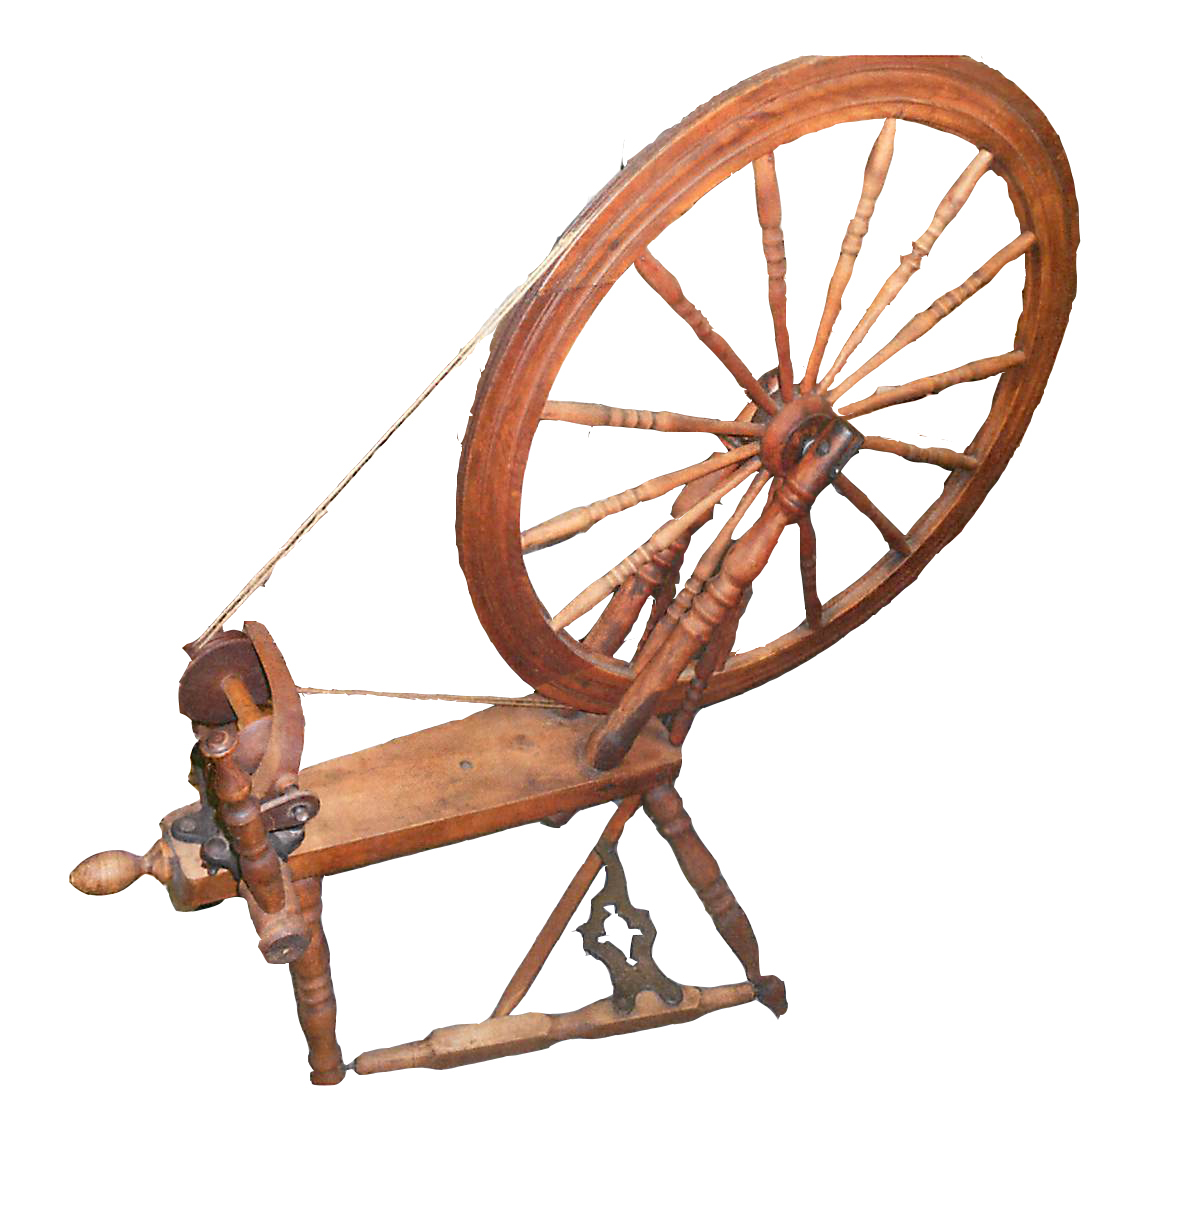 34. Spinning wheel.